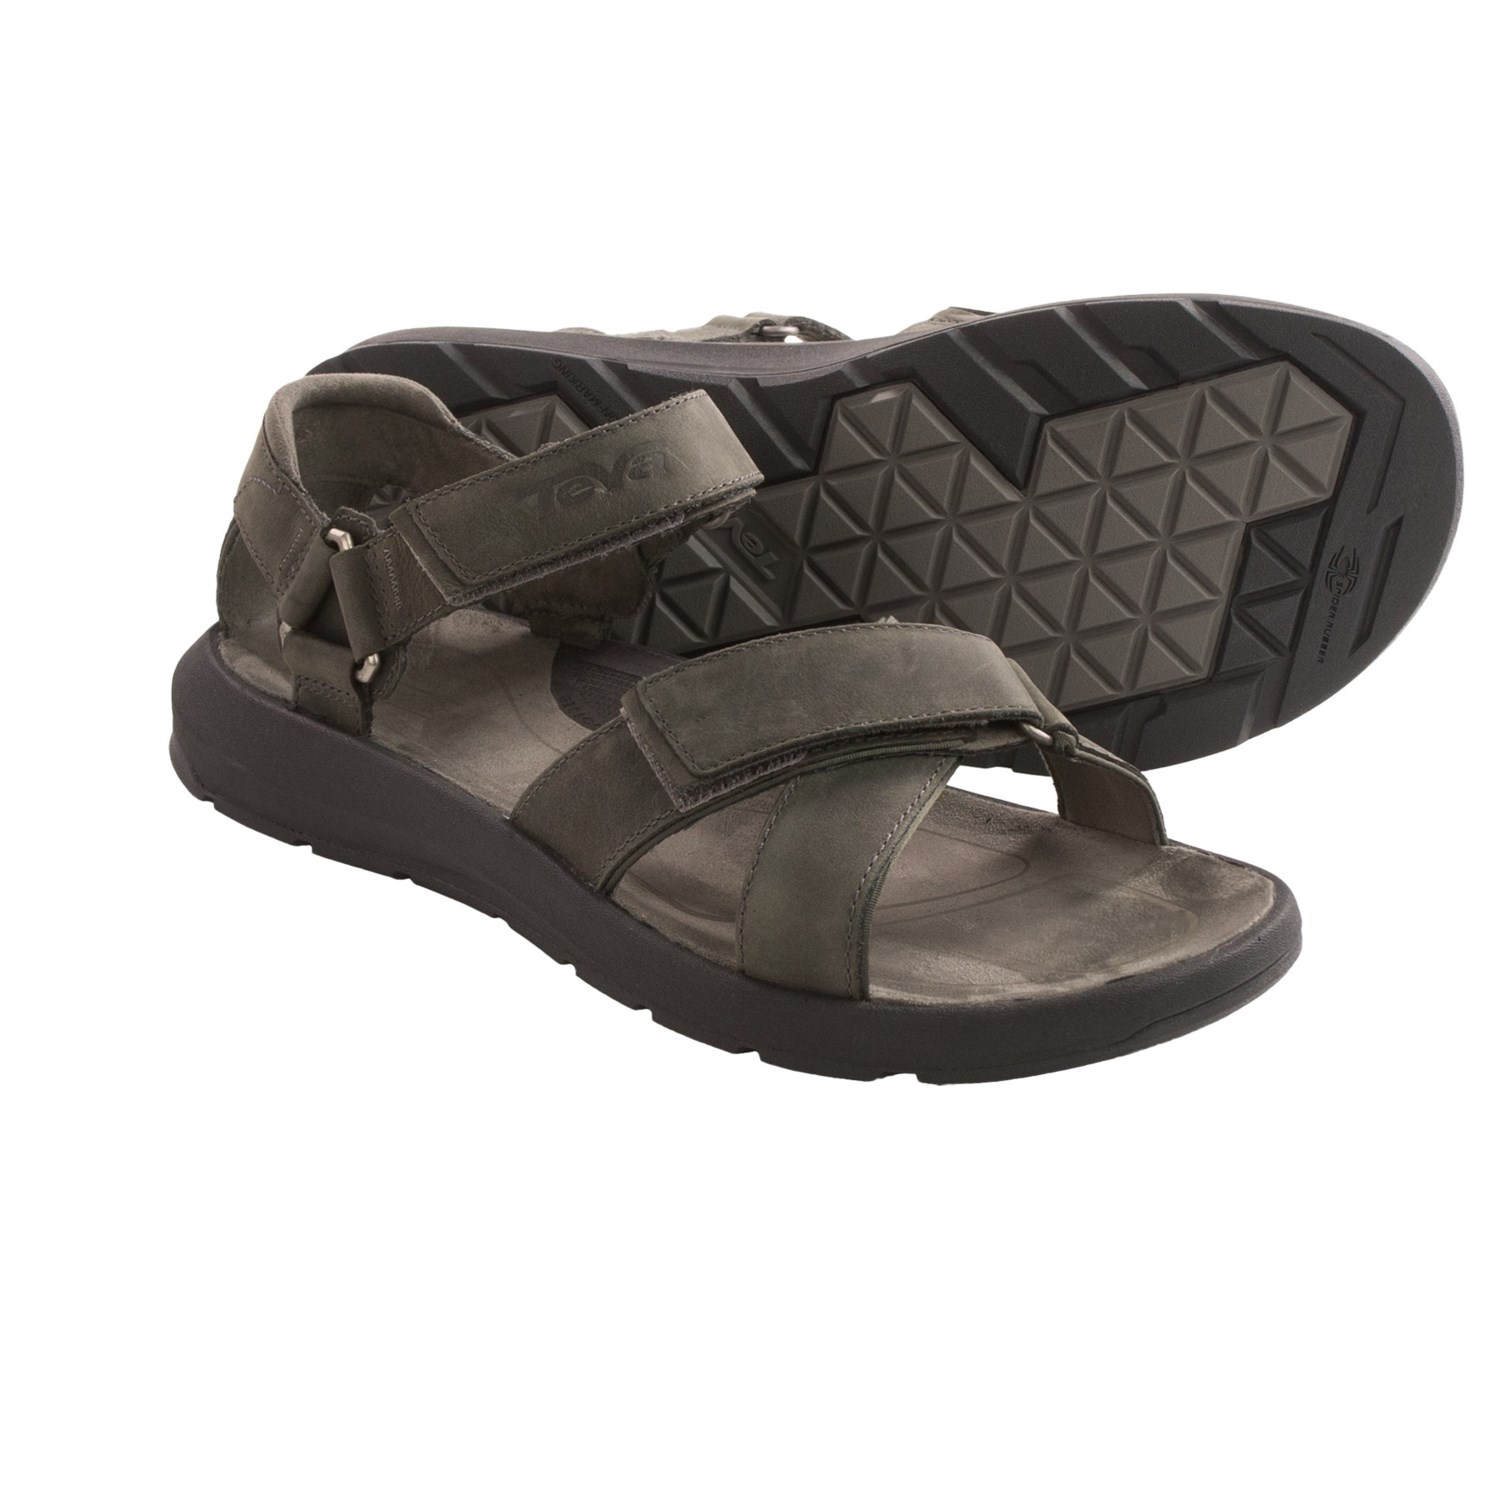 Teva Berkeley Sandals (For Men) - Save 44%